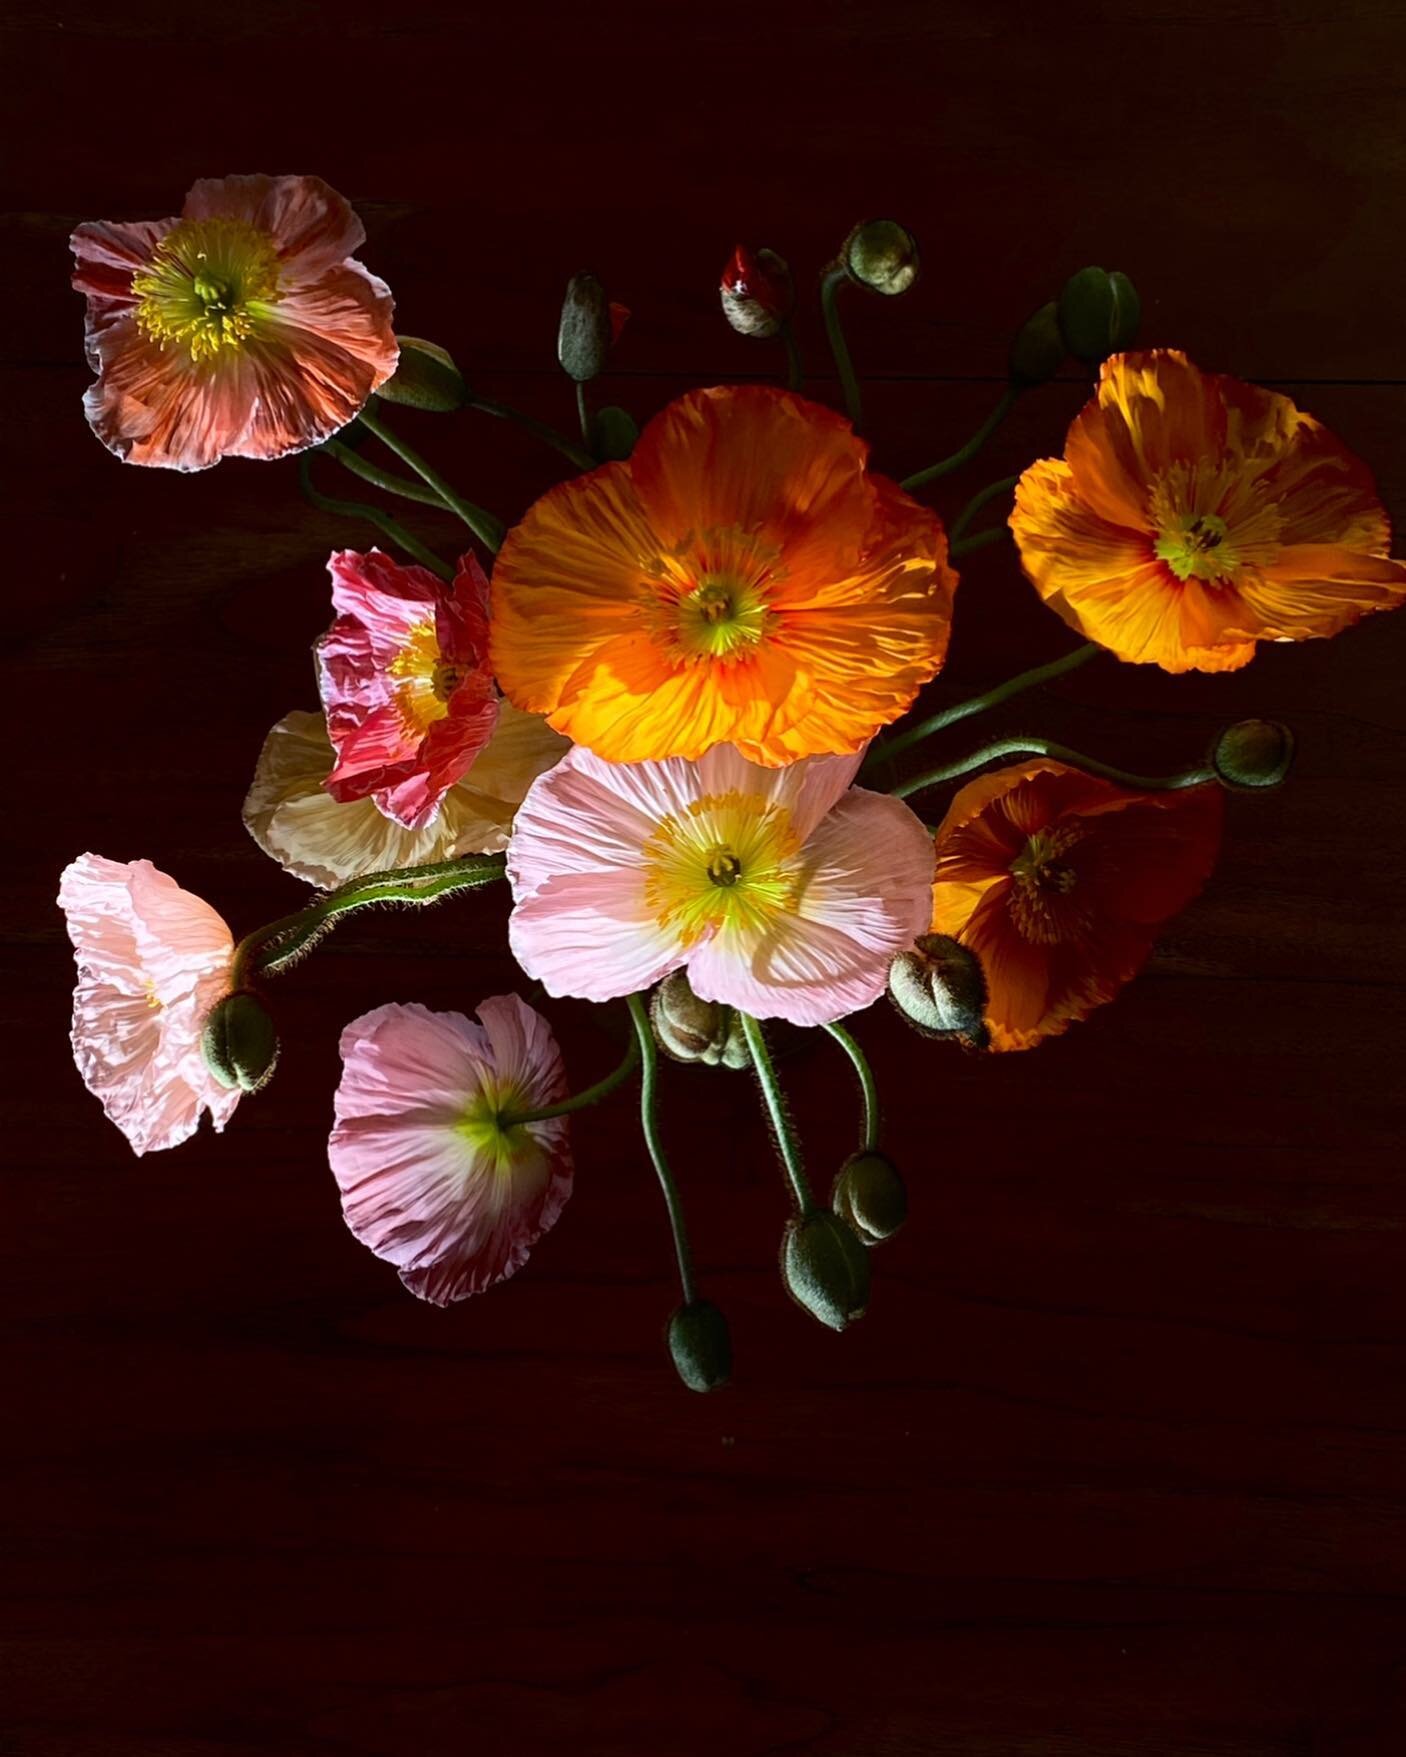 Winter poppies ✨
📷 @flissdodd 
.
.
.
#ciaomrhalinspiration #nature #colour #flowers #design #gardendesign